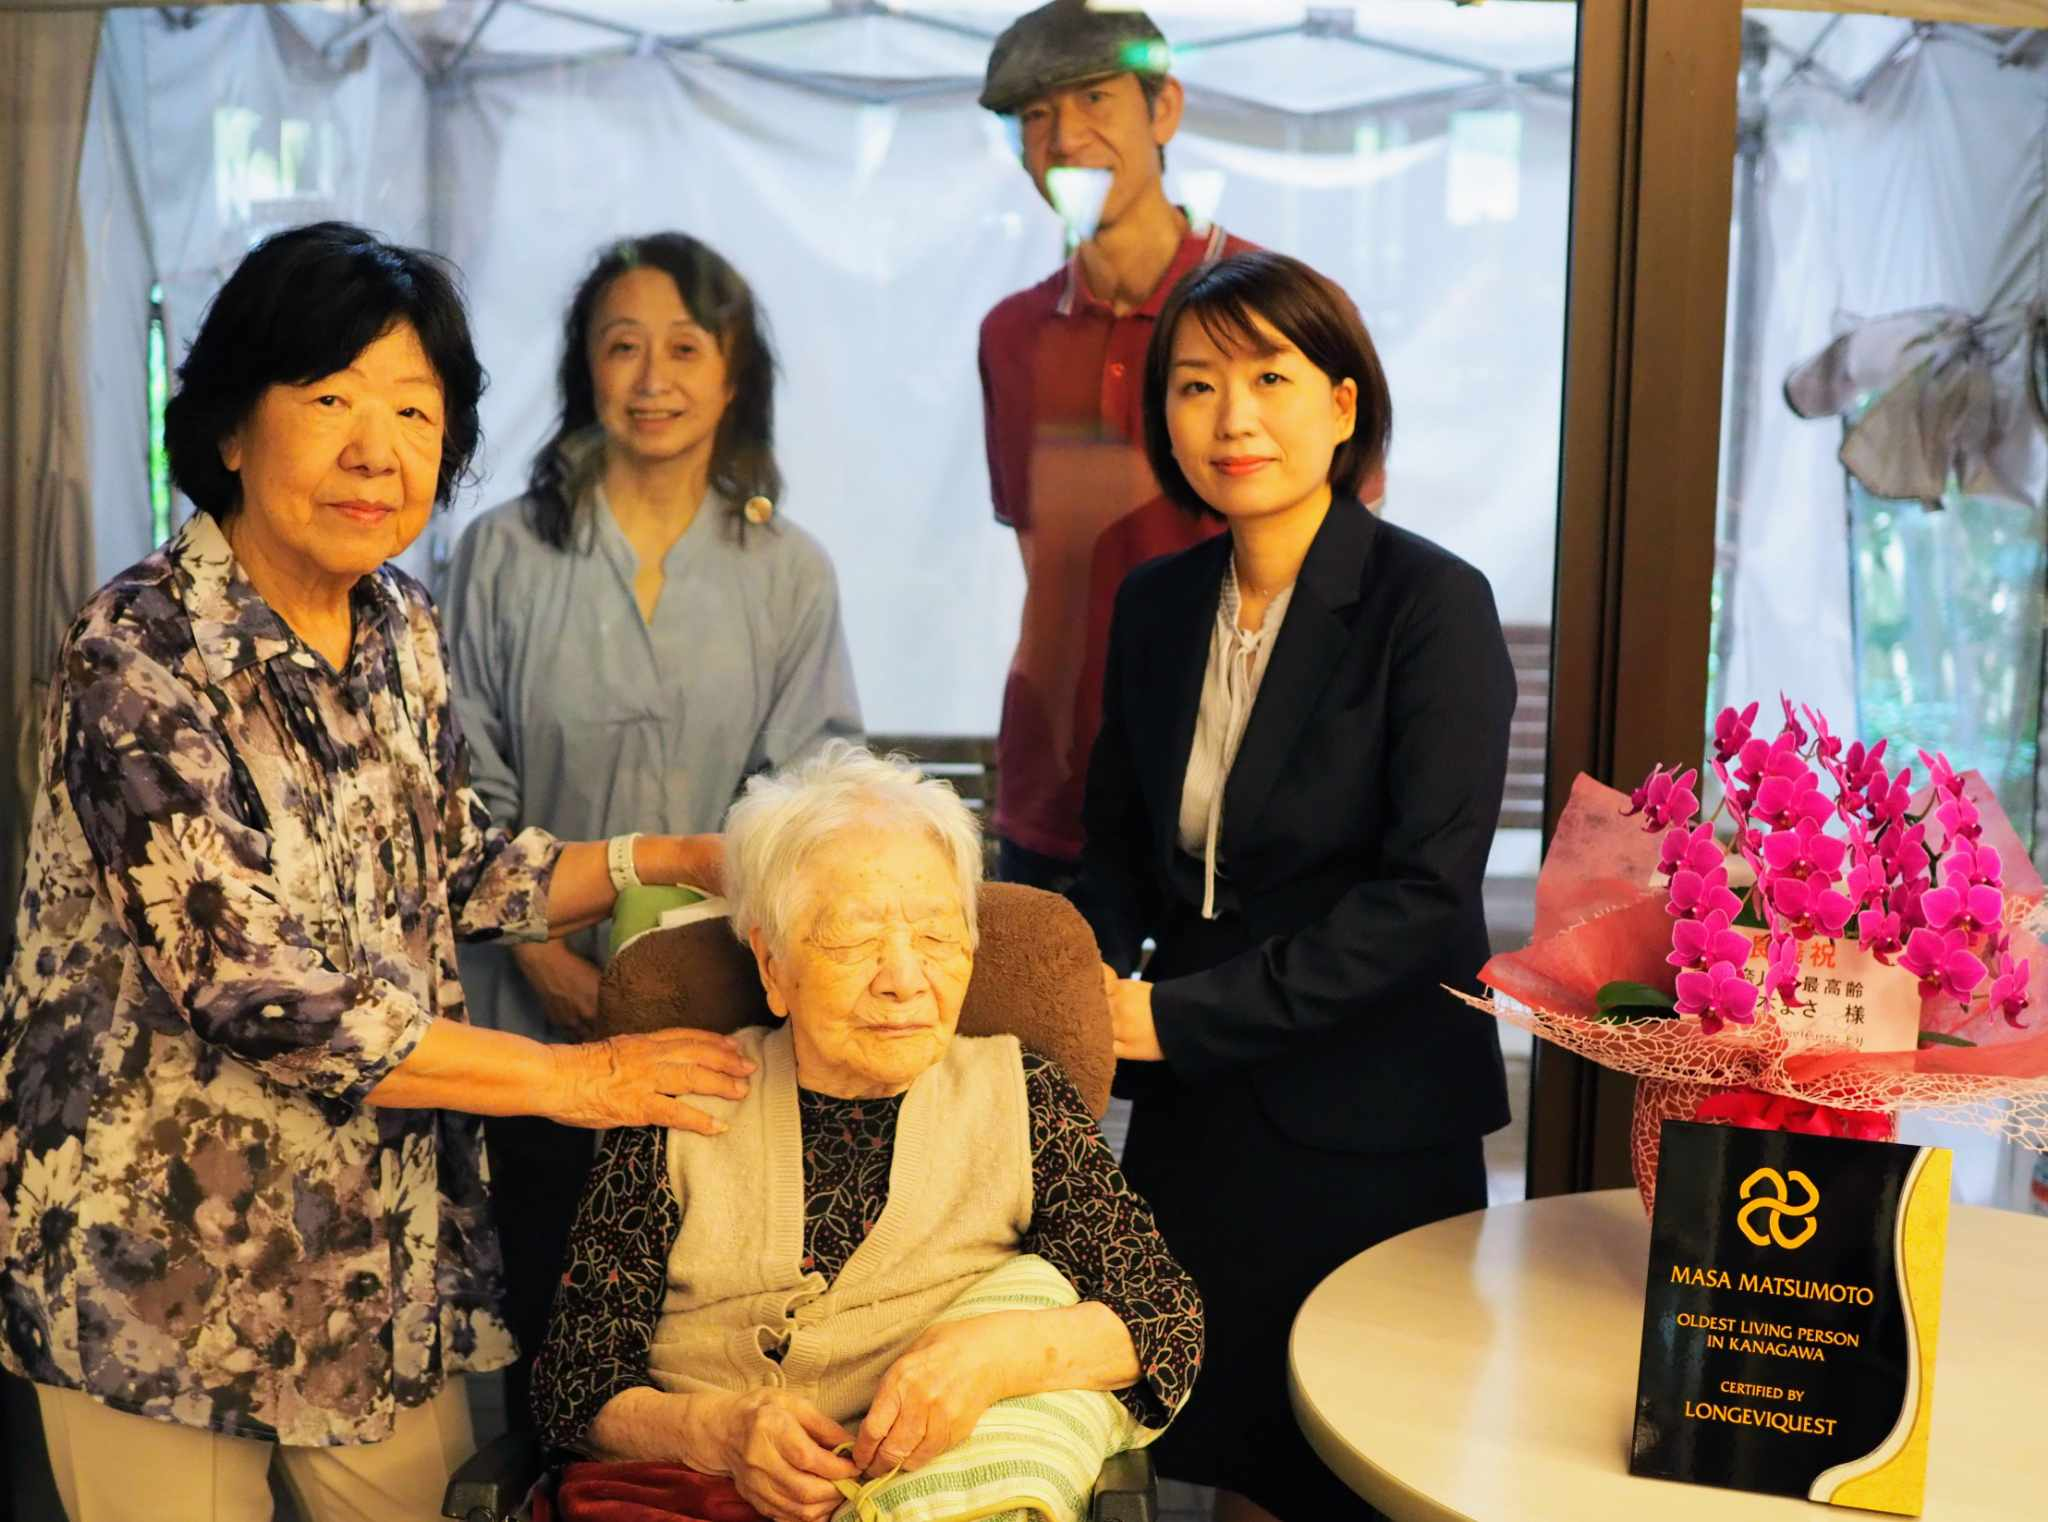 LongeviQuest Japan Visited Mrs. Masa Matsumoto To Celebrate Her Longevity